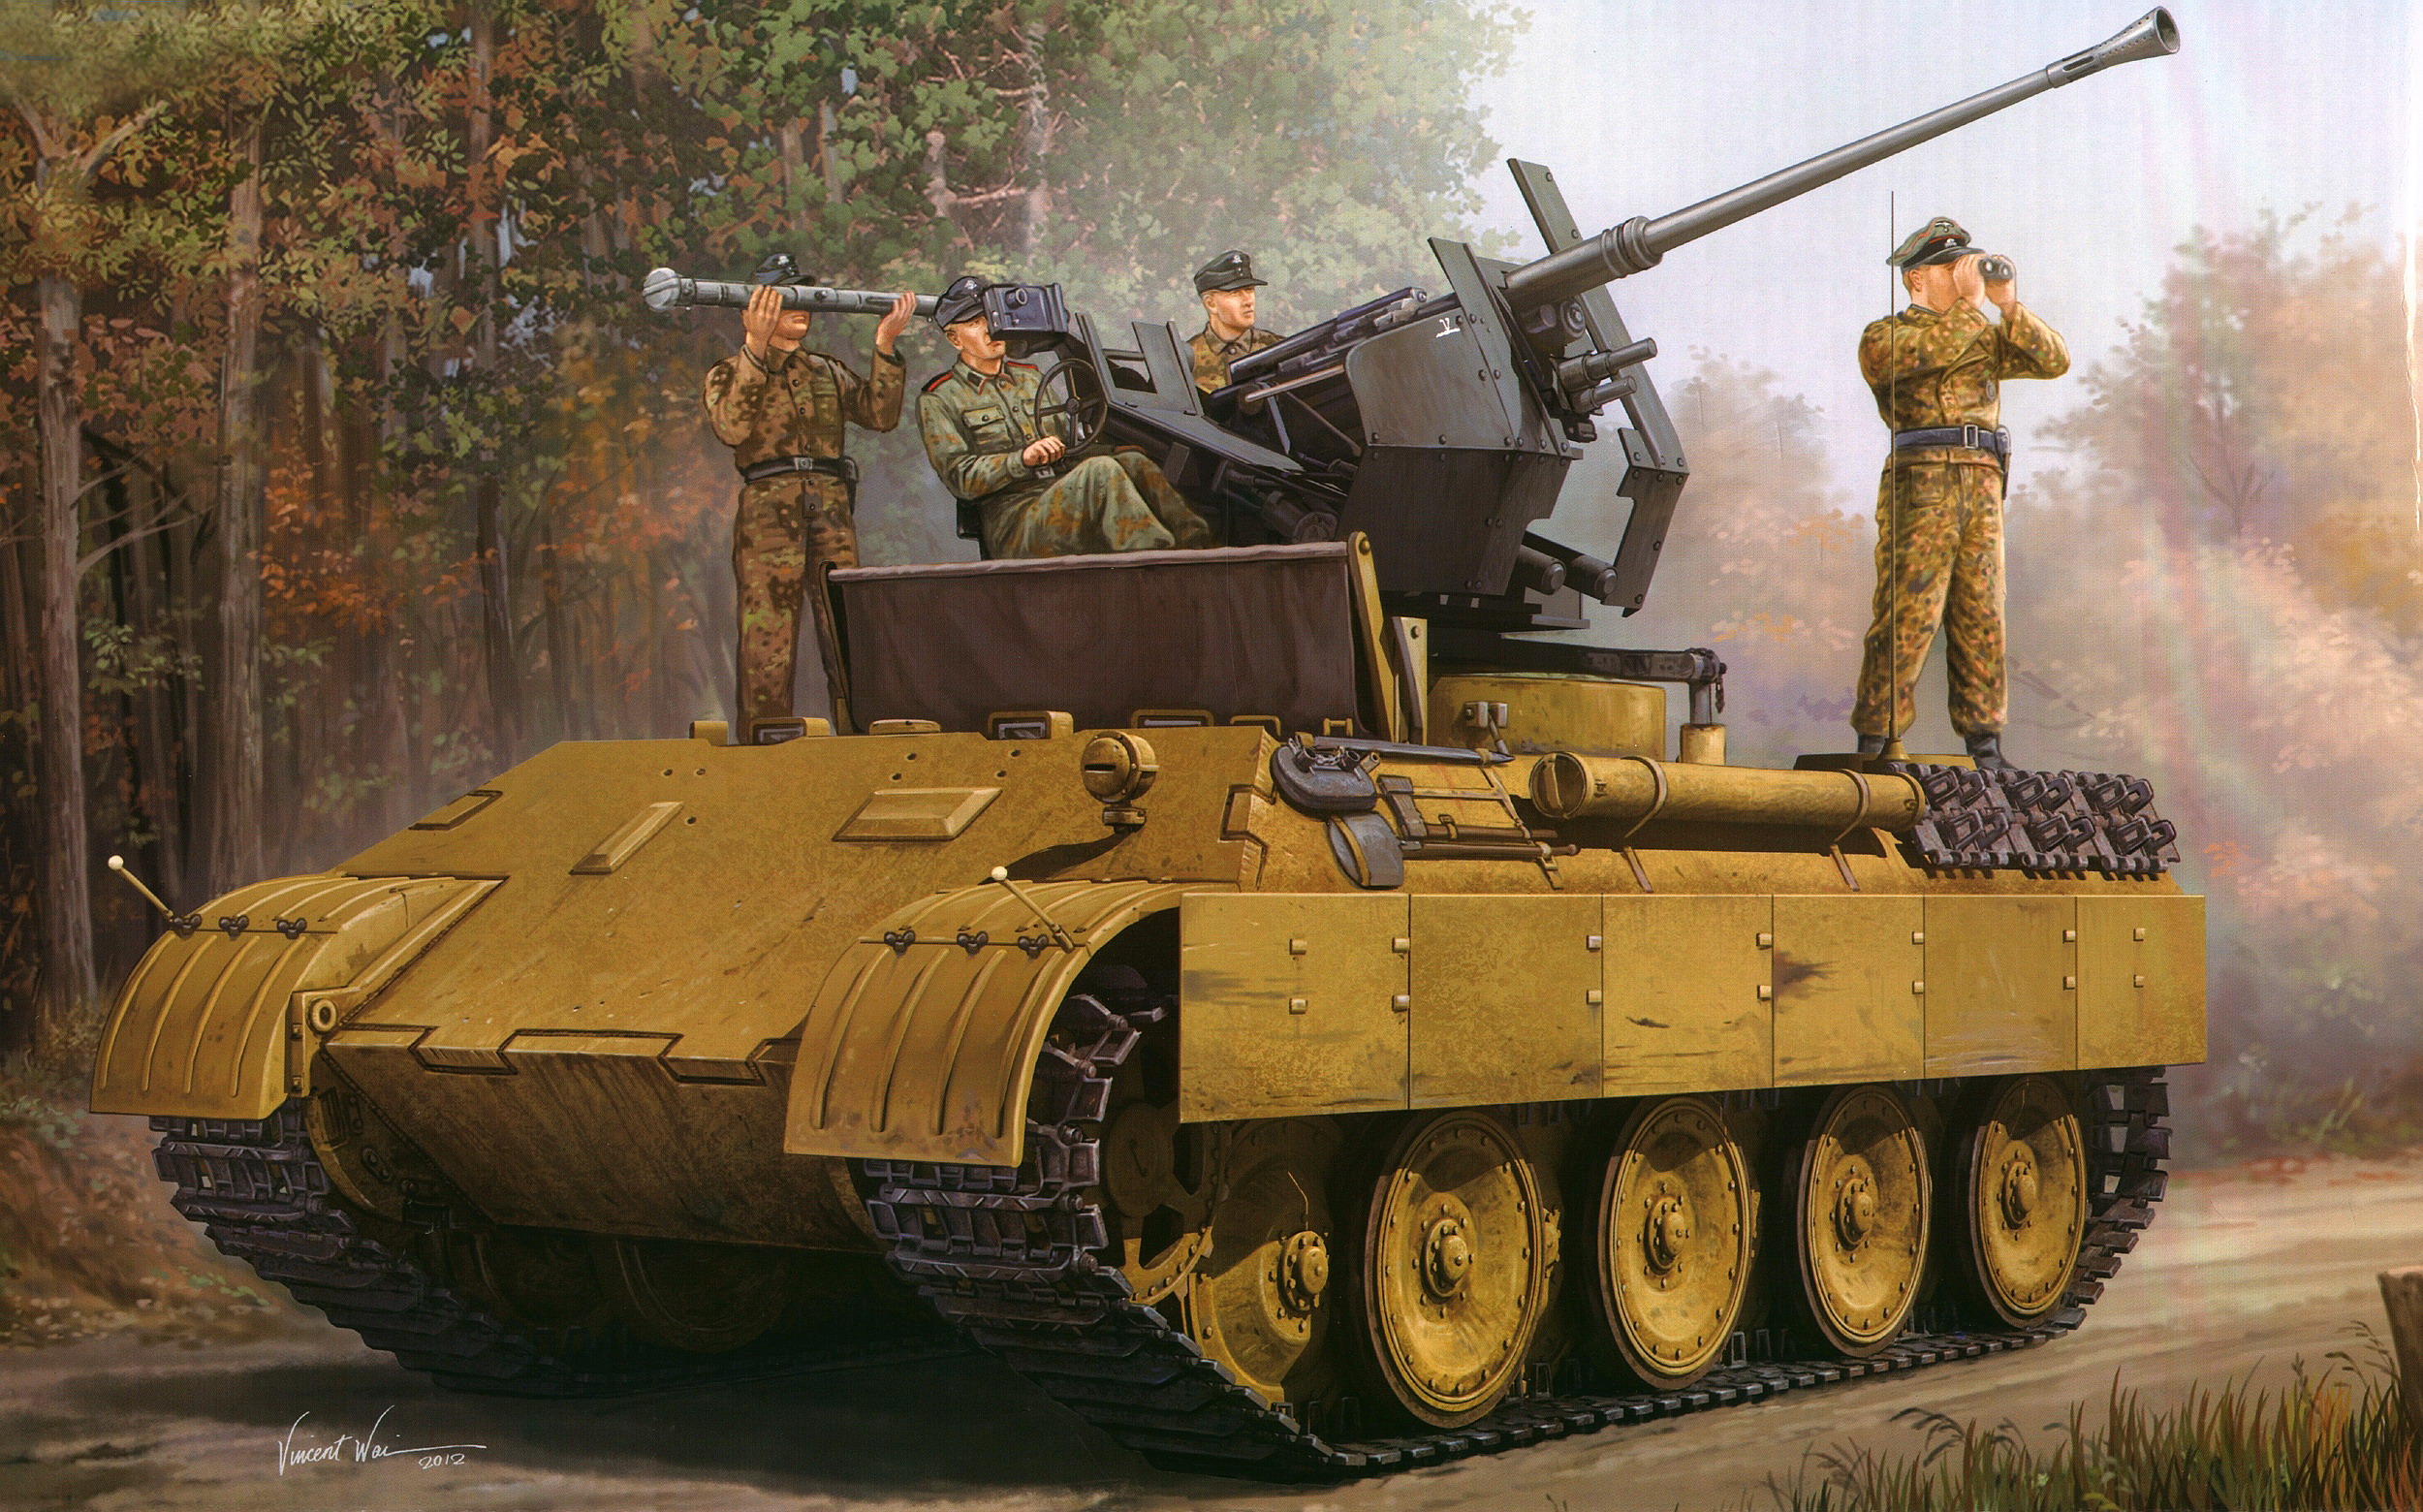 Немецкие танки 1 35. 82492 Танк German Panther asuf.d Flak Bergepanther Hobby Boss, 1/35. Немецкие ЗСУ 1/35. Hobby Boss 1/35 Panther. Немецкая ЗСУ Panther Ausf.d Flak Bergepanther.